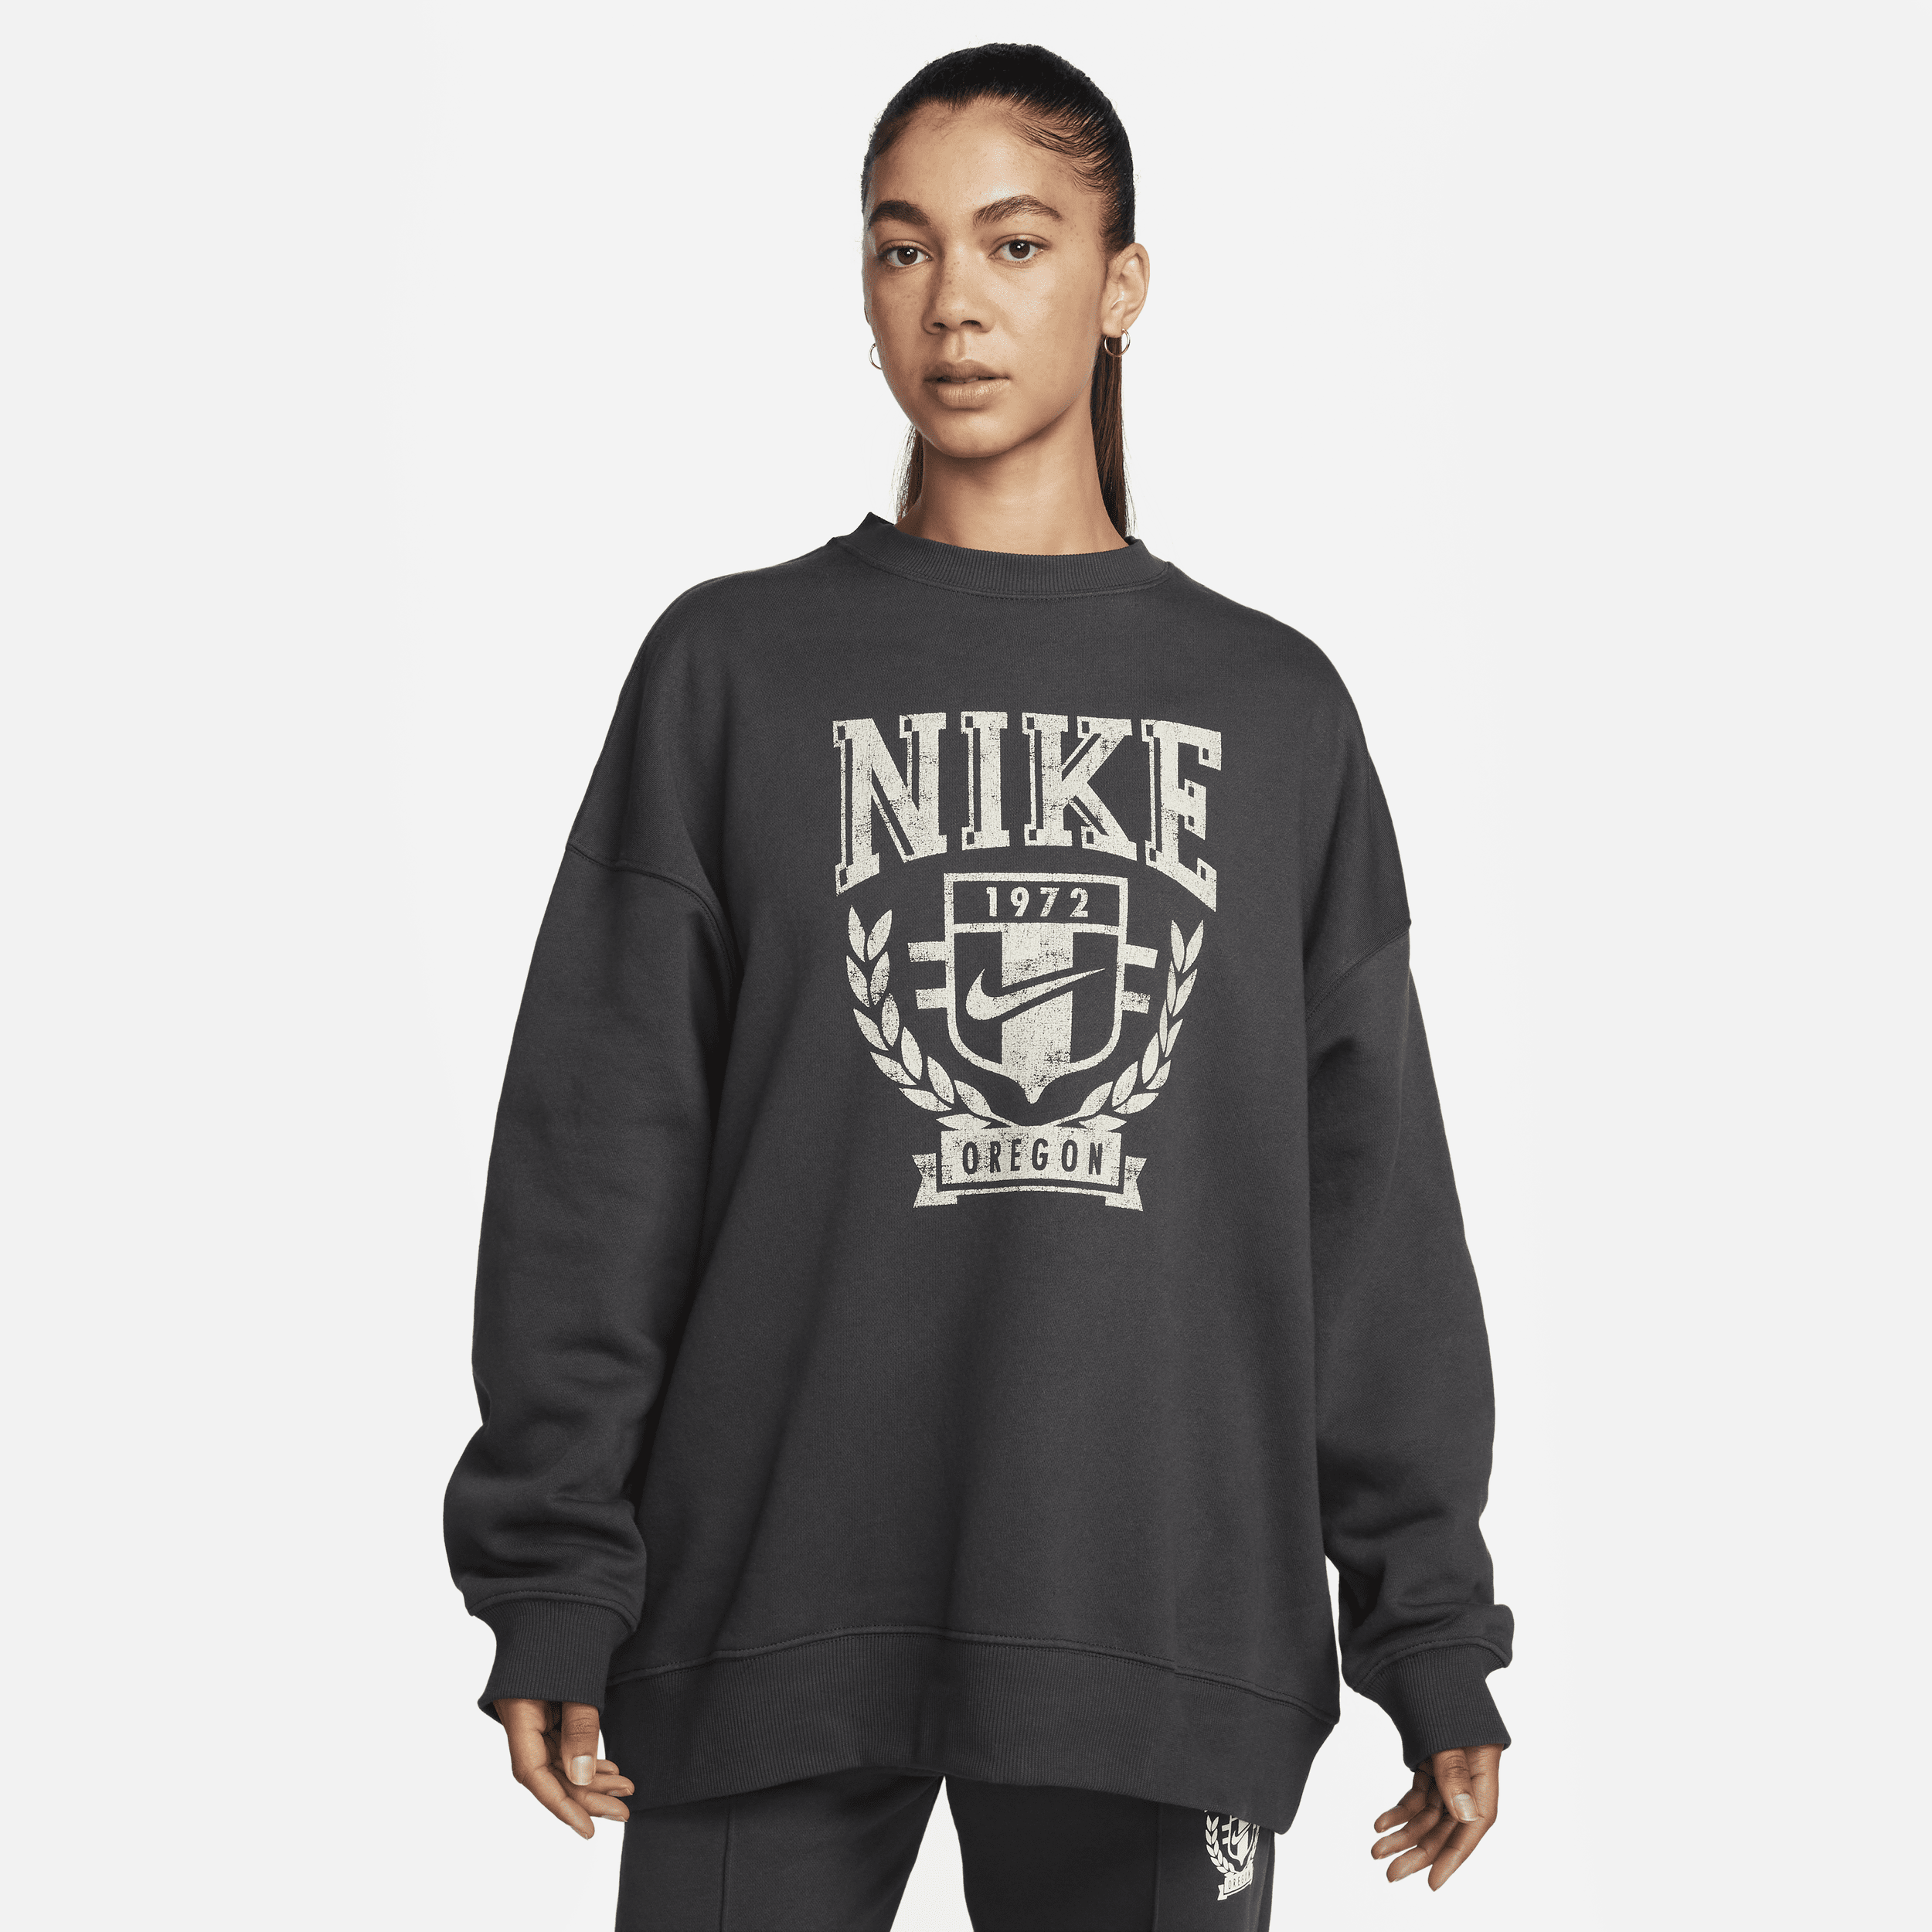 Overdimensioneret Nike Sportswear-sweatshirt i fleece med rund hals til kvinder - grå